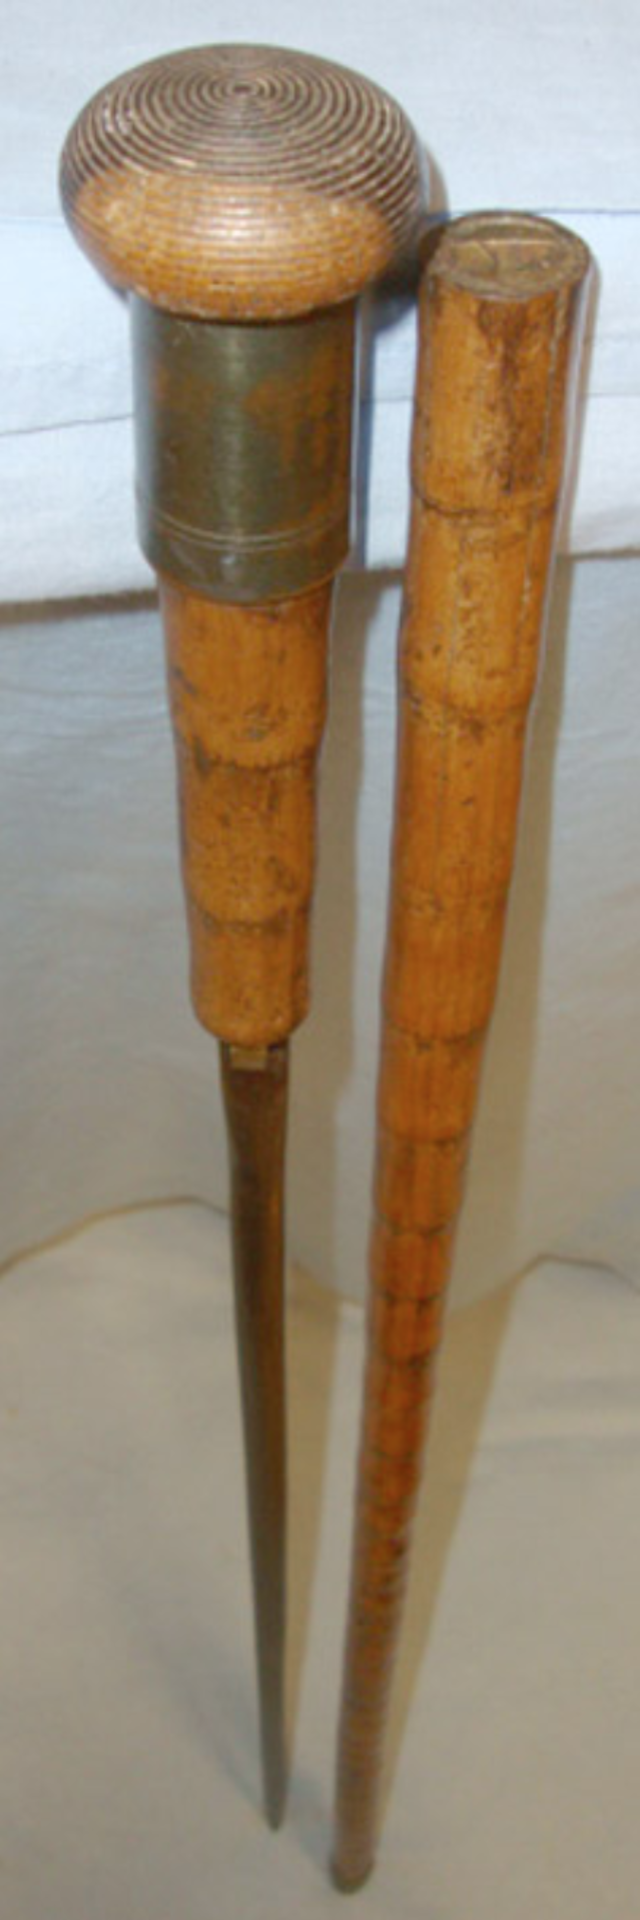 Victorian English Gentleman's Cane Sword Stick With Brass Fittings Marked 'Bernard 4 Church Place'